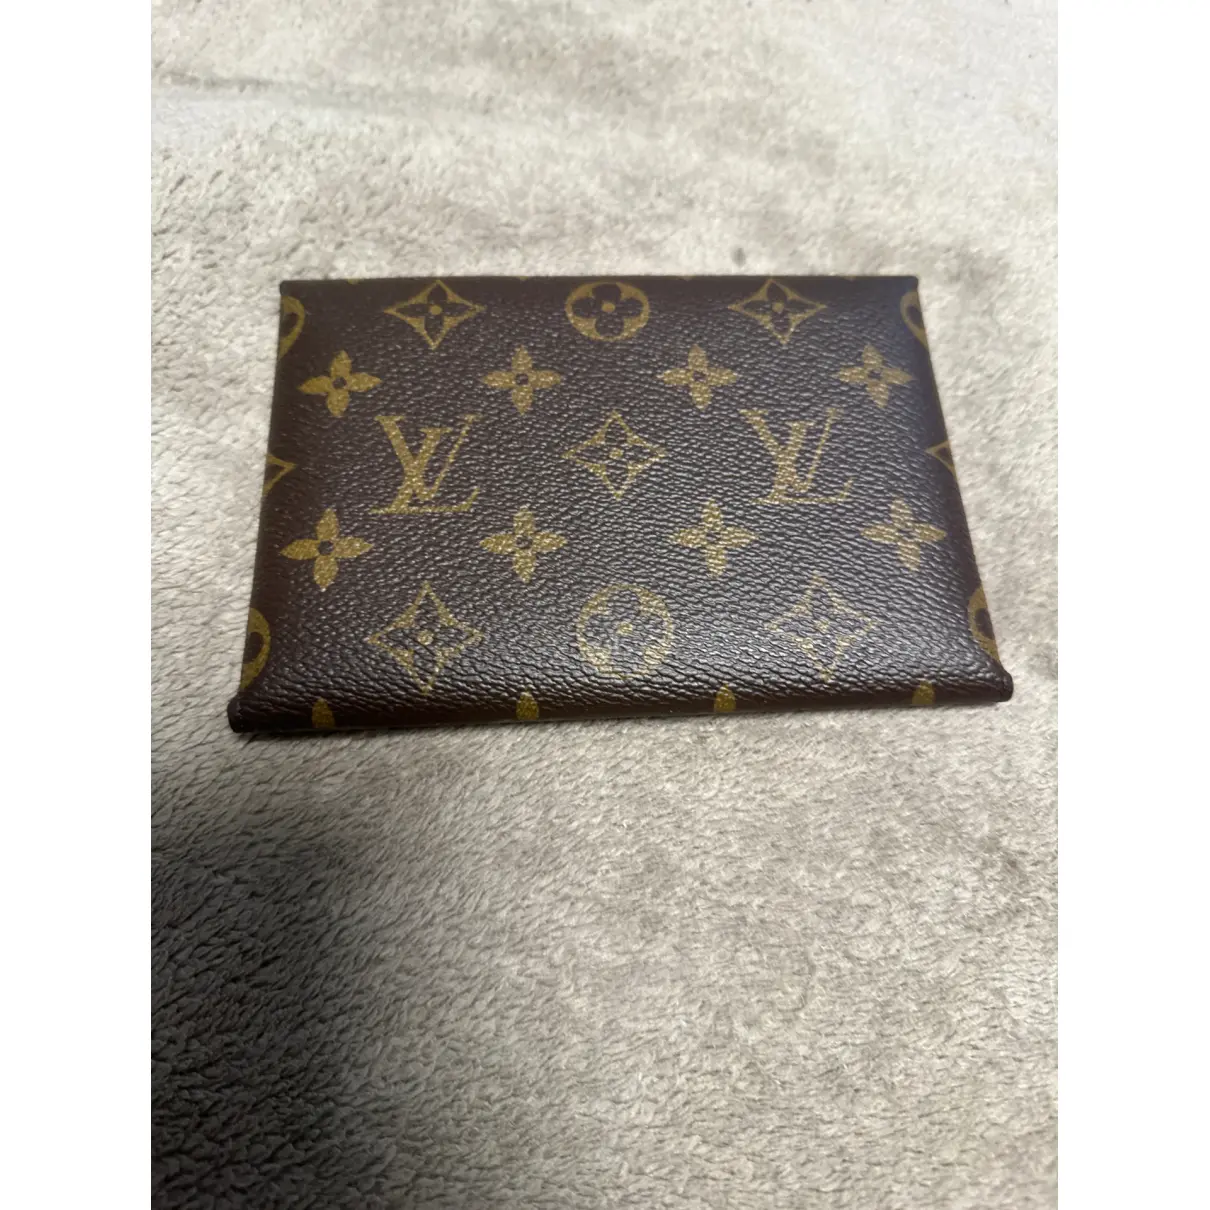 Buy Louis Vuitton Kirigami leather wallet online